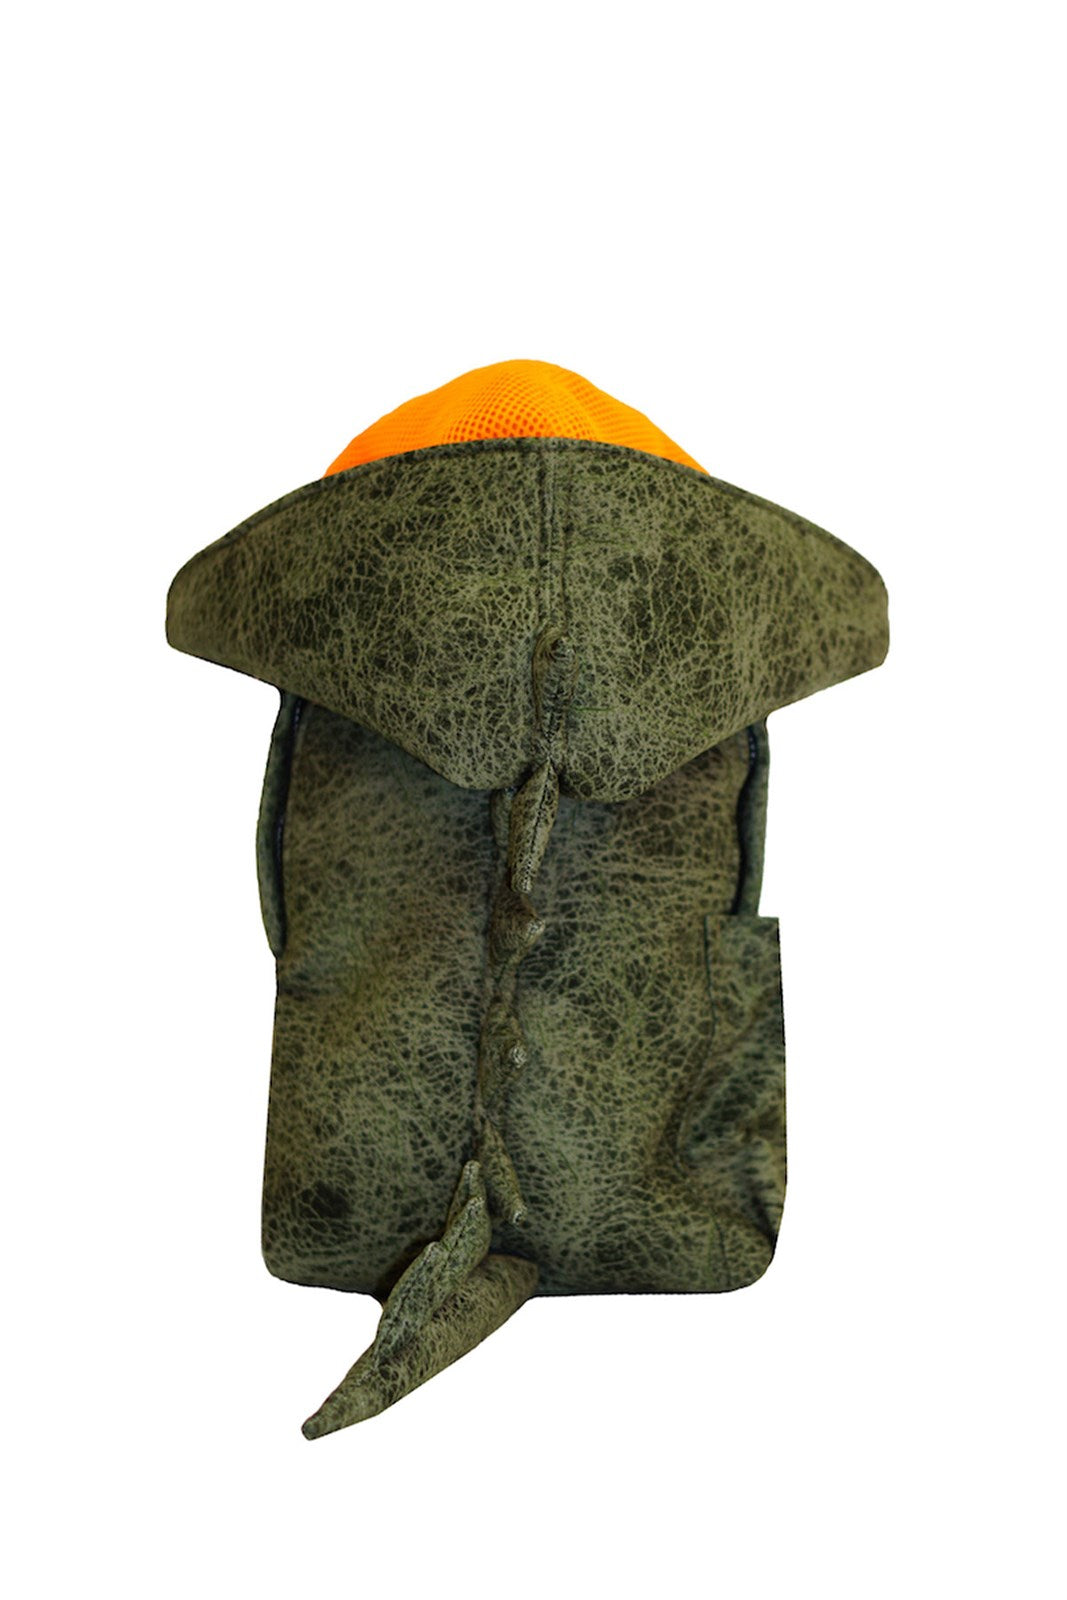 Ikigai The City Dinosaur Children's Removable Hooded Backpack